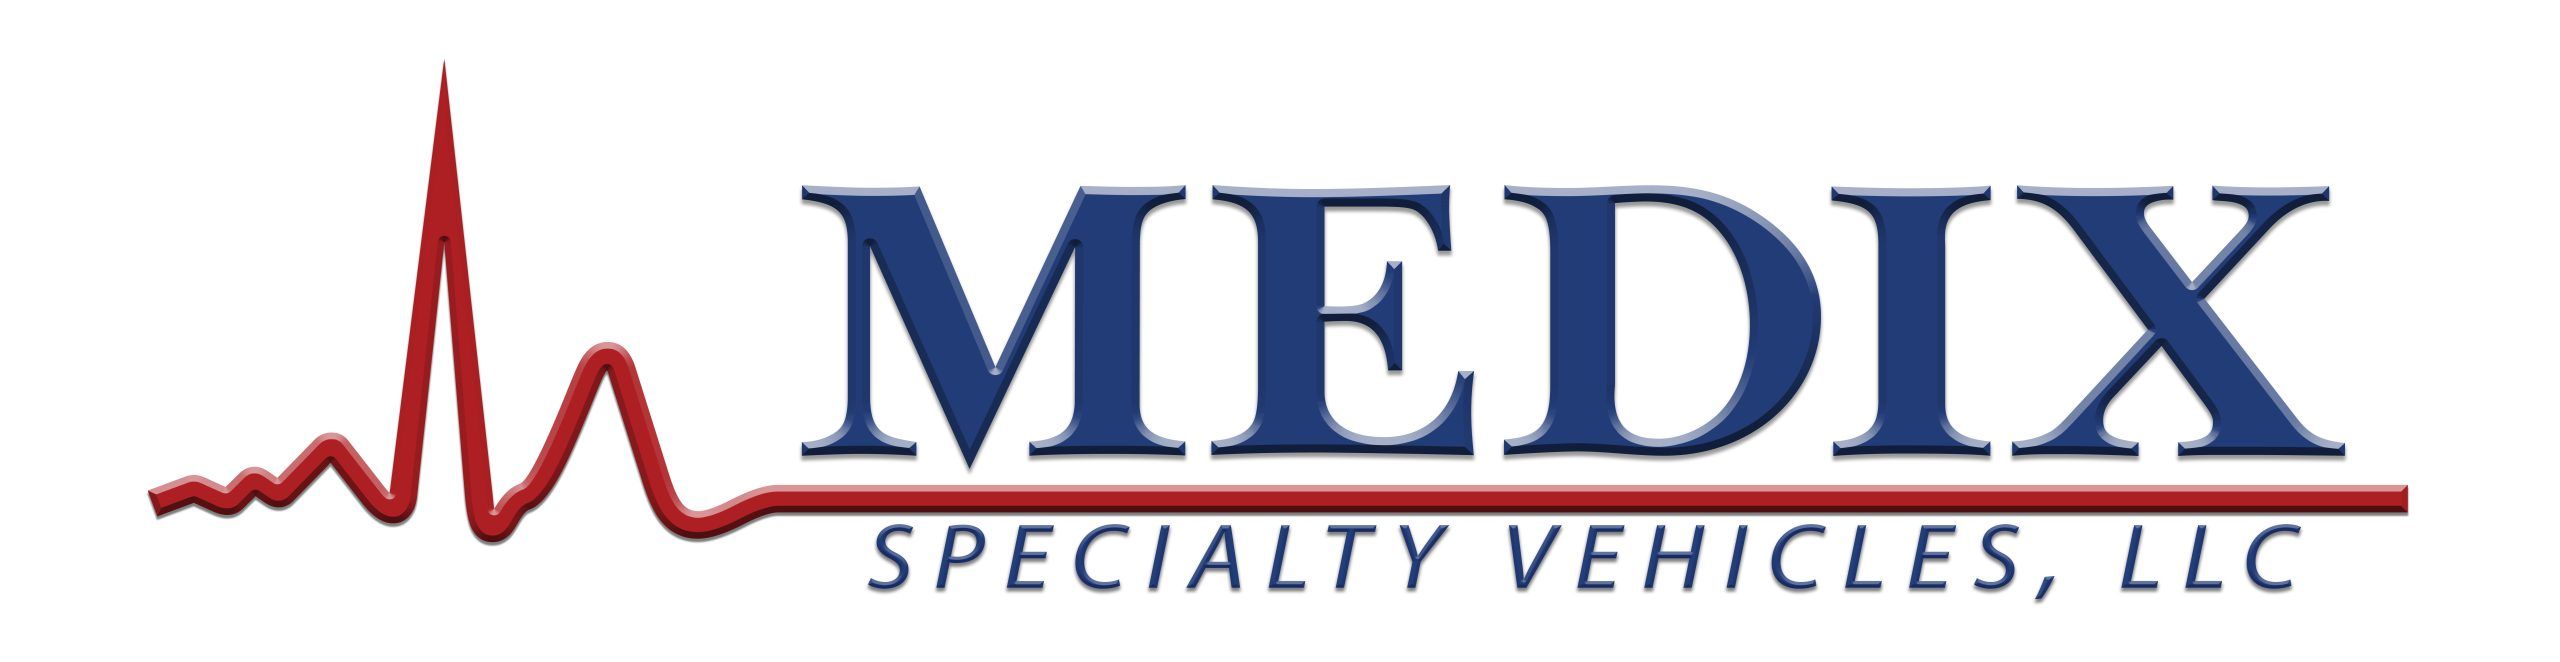 Medix Specialty Vehicles, LLC